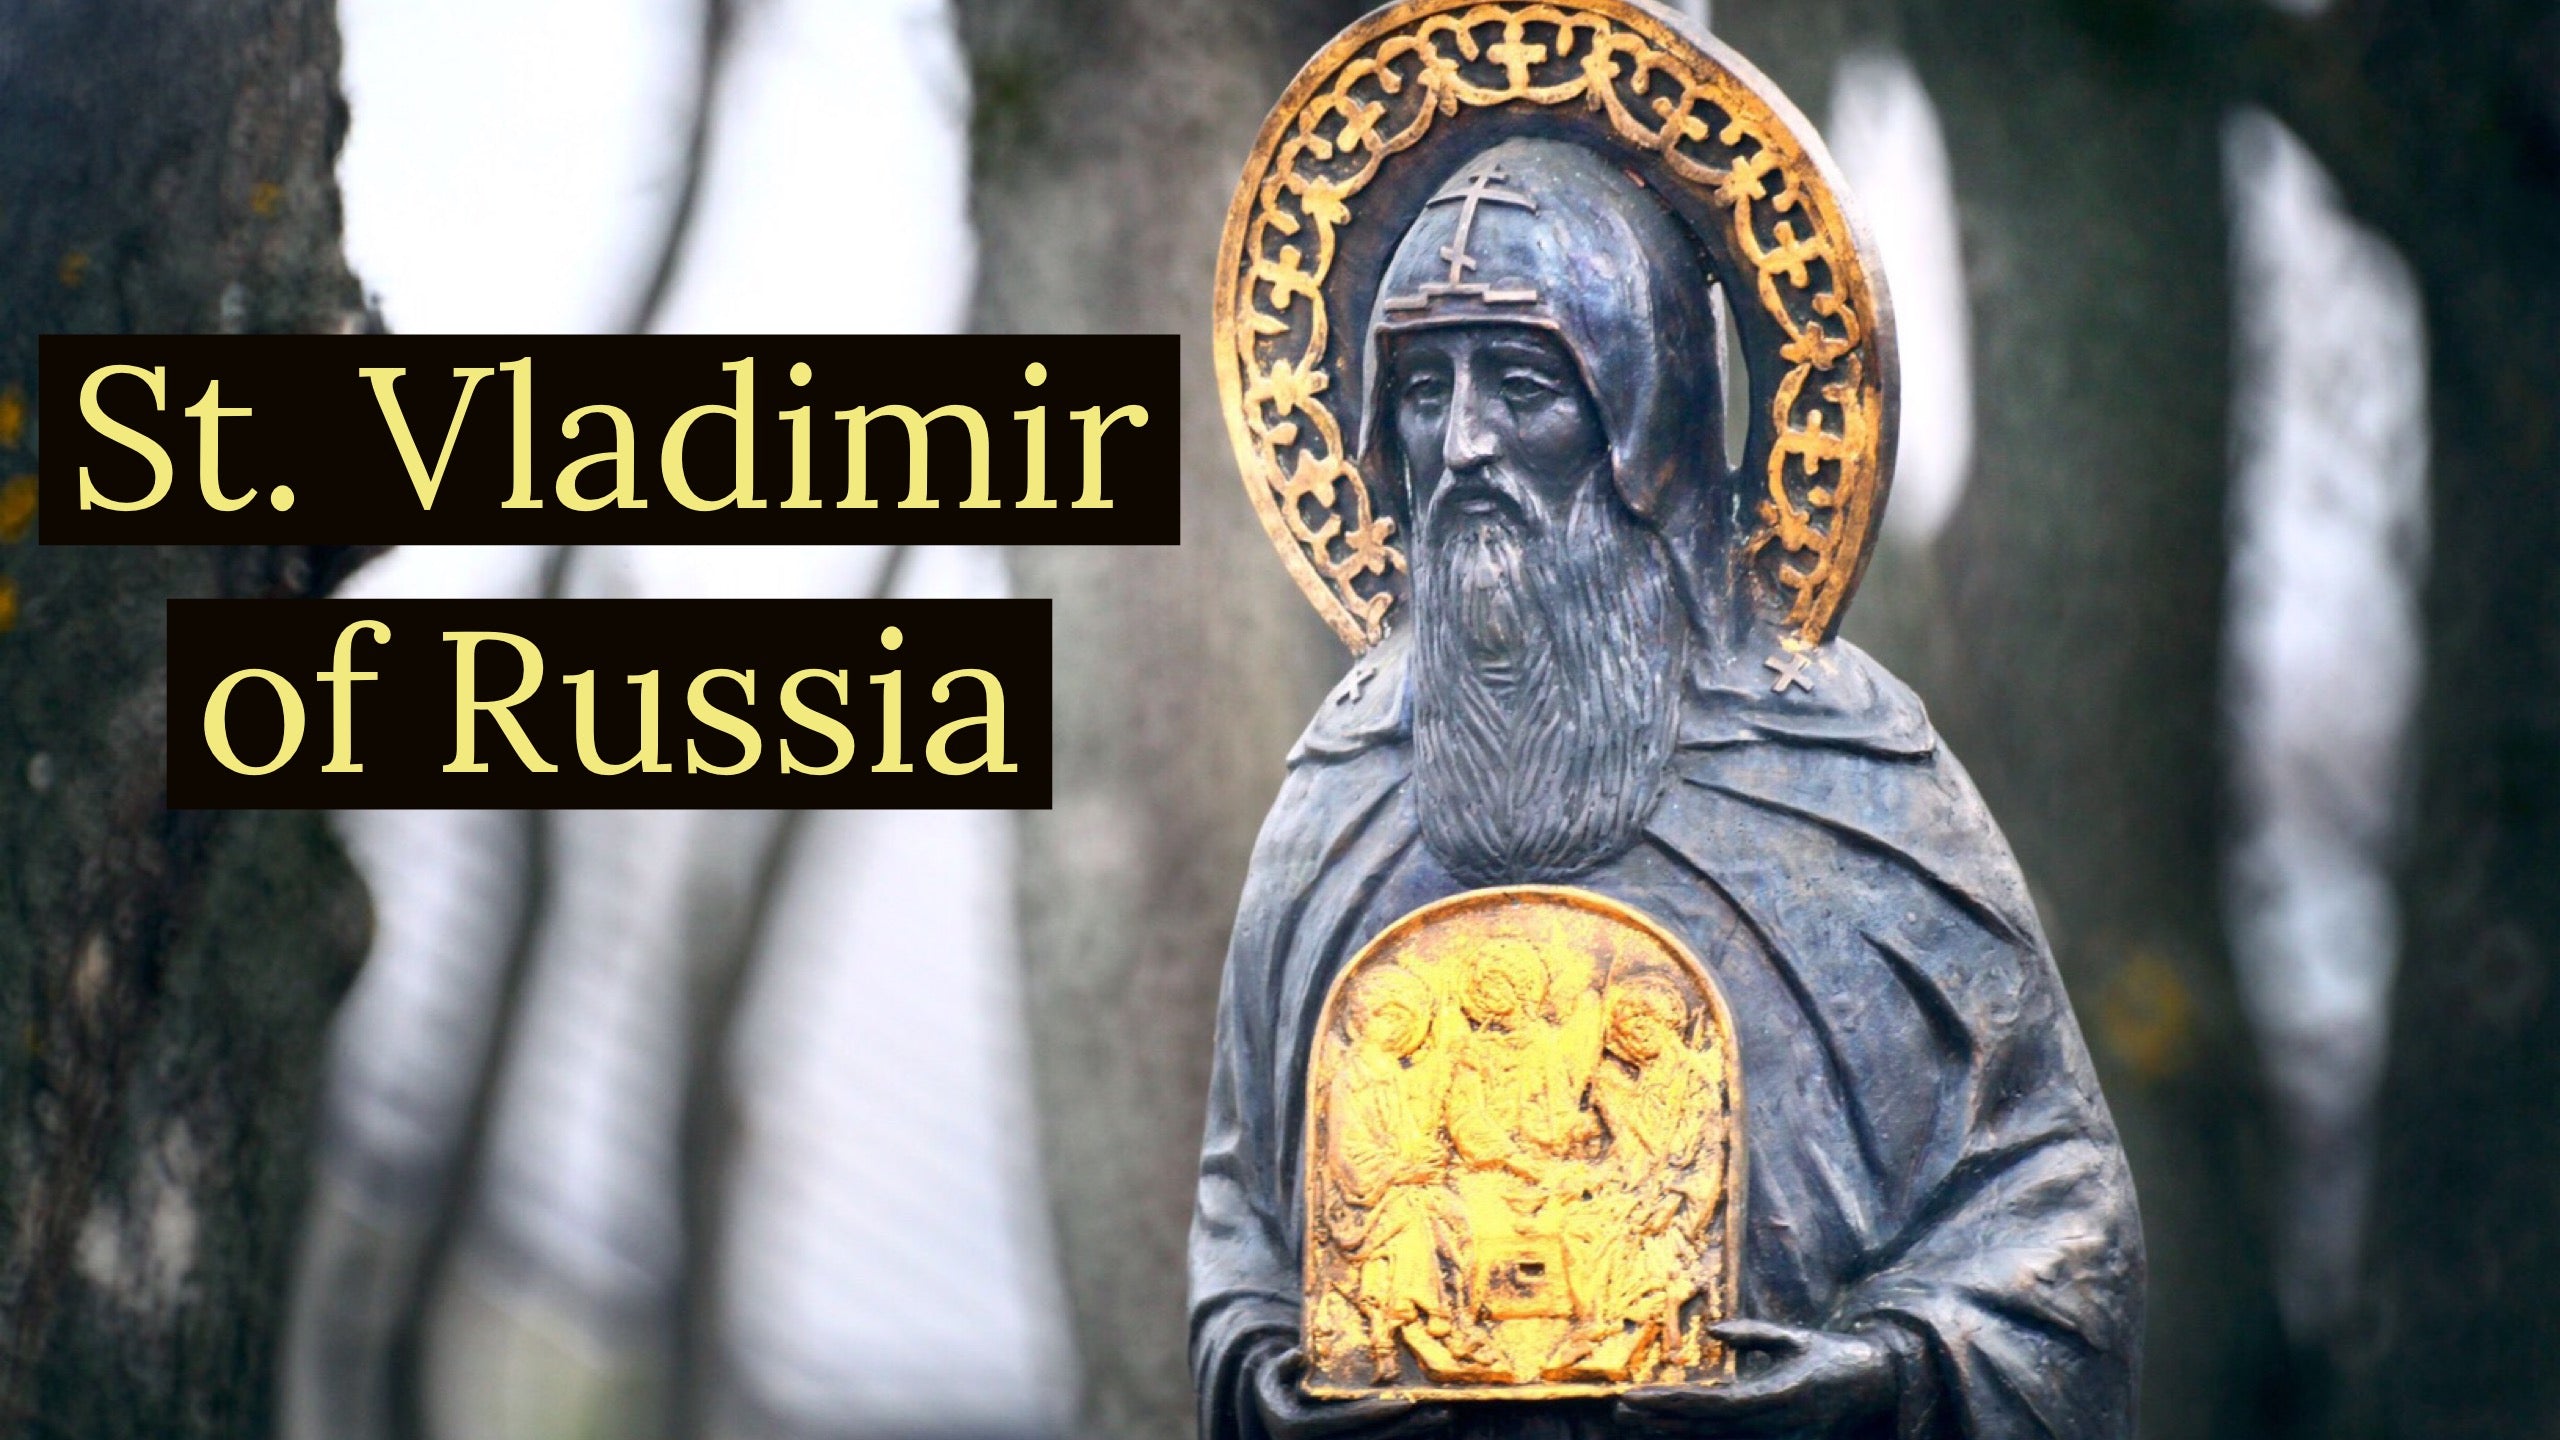 St. Vladimir of Russia